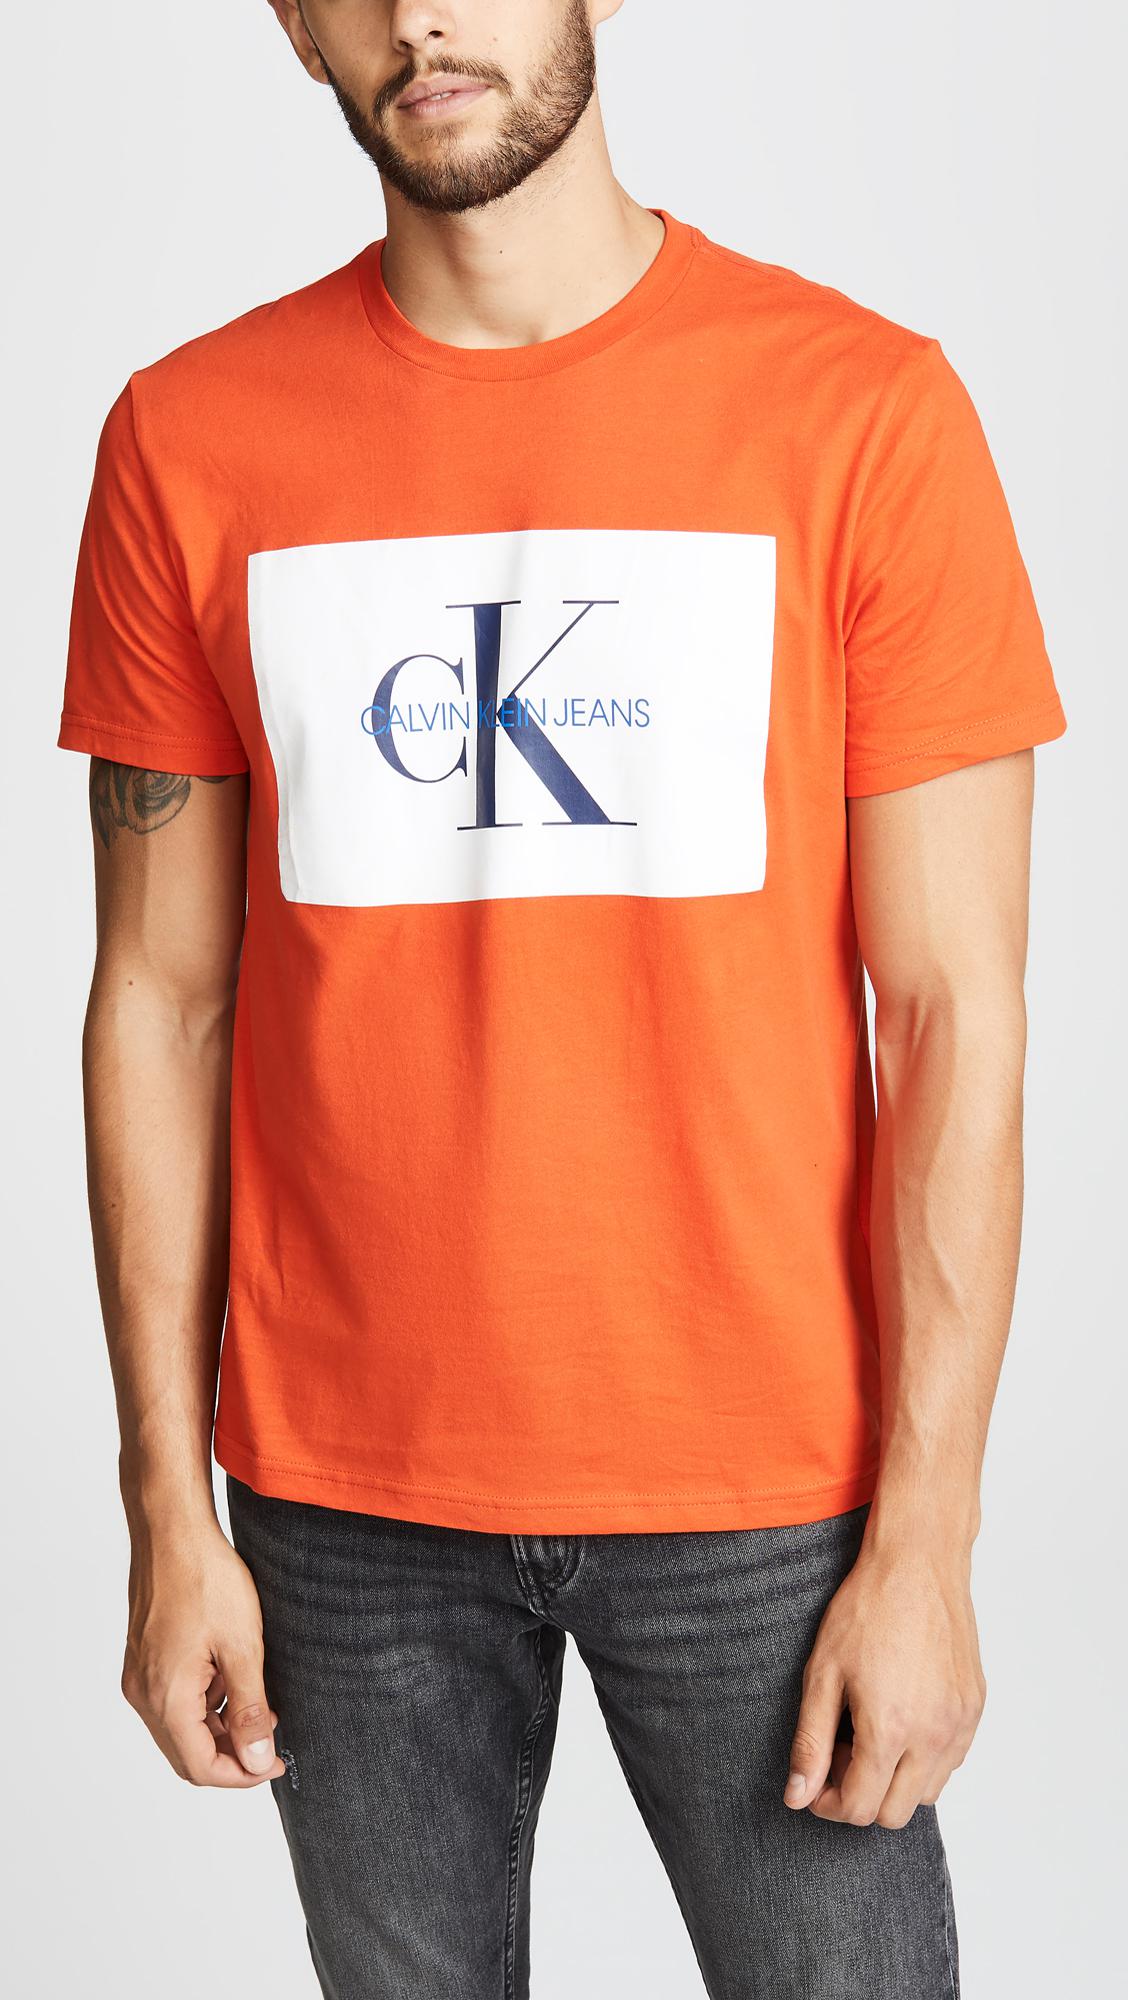 Calvin Klein T Shirt Orange Top Sellers, 42% OFF | www.digitaldev.com.br